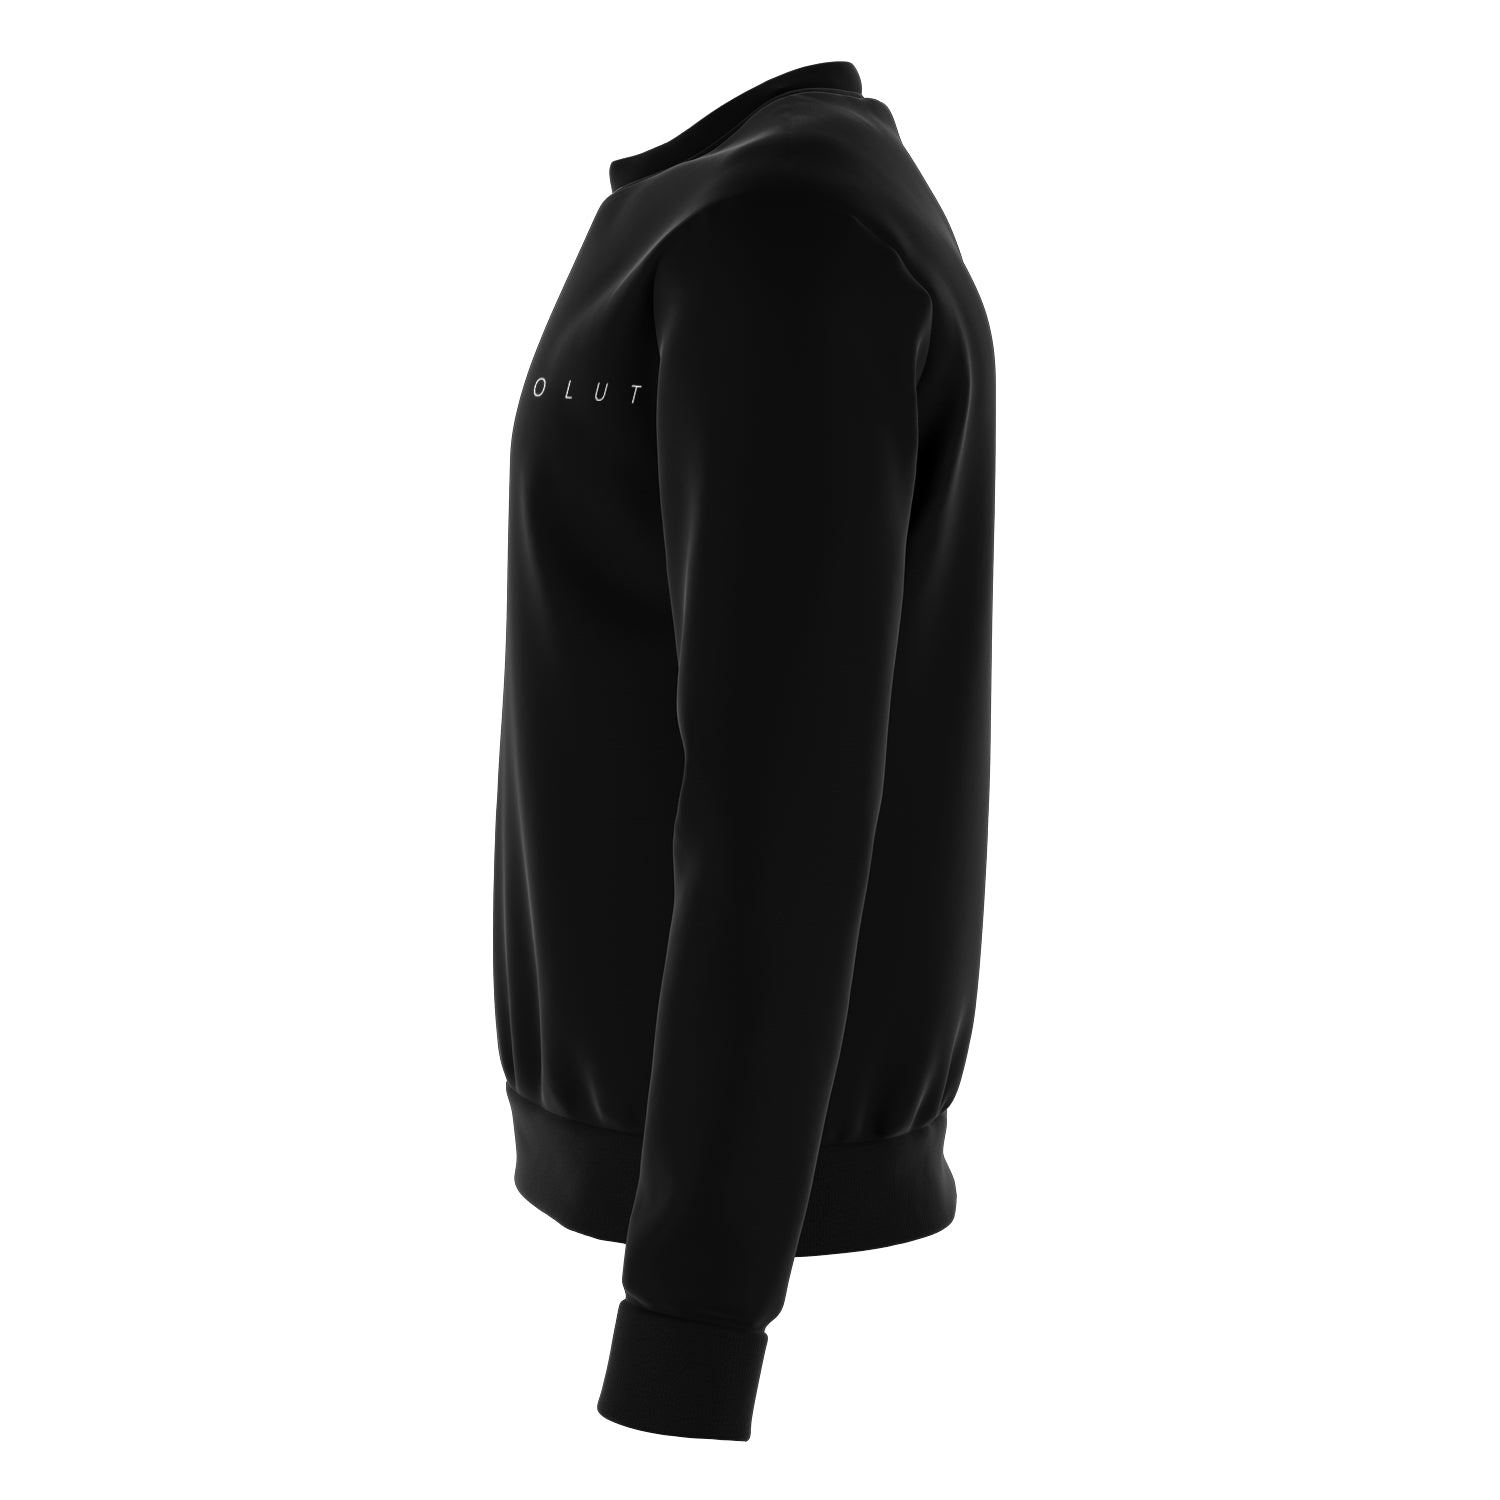 SADA Athletic Sweatshirt - Black